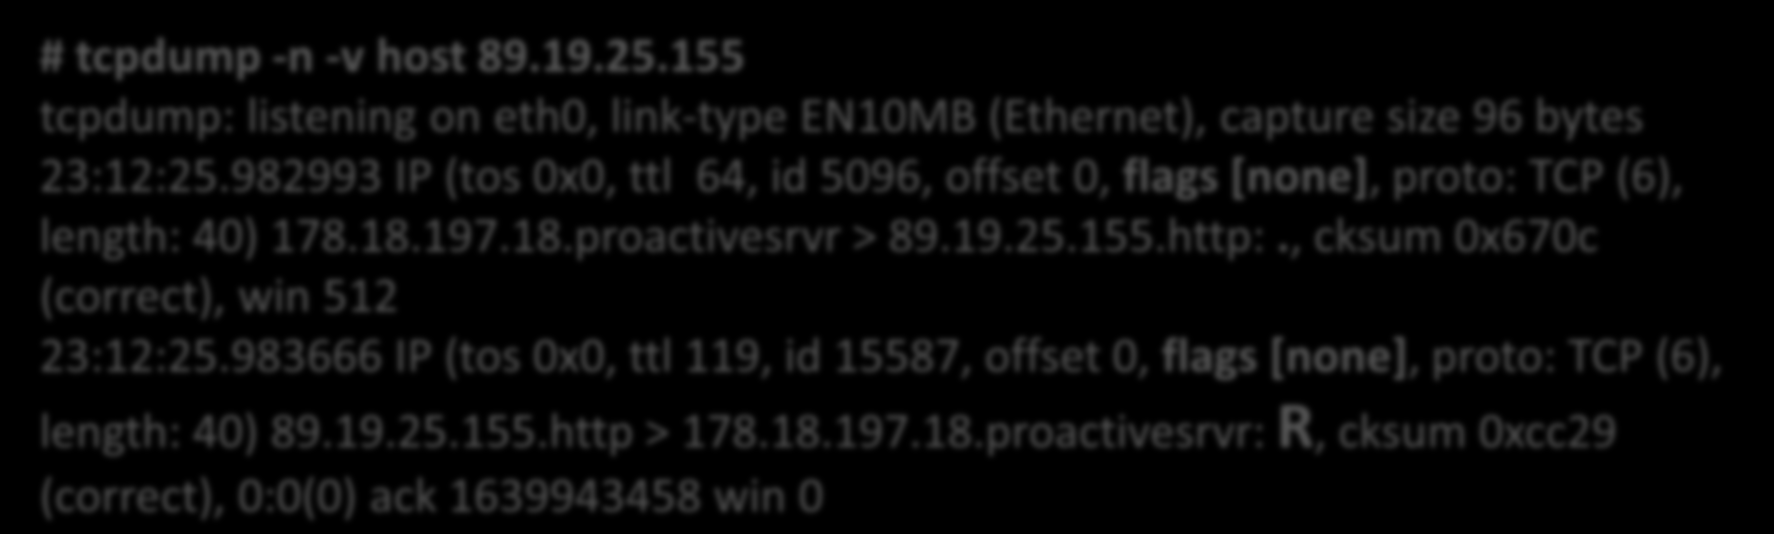 TCP Bayrakları ile Firewall Keşfi # hping3 ozanucar.com -p 80 -c 1 HPING ozanucar.com (eth0 89.19.25.155): NO FLAGS are set, 40 headers + 0 data bytes len=46 ip=89.19.25.155 ttl=119 id=15587 sport=80 flags=ra seq=0 win=0 rtt=0.